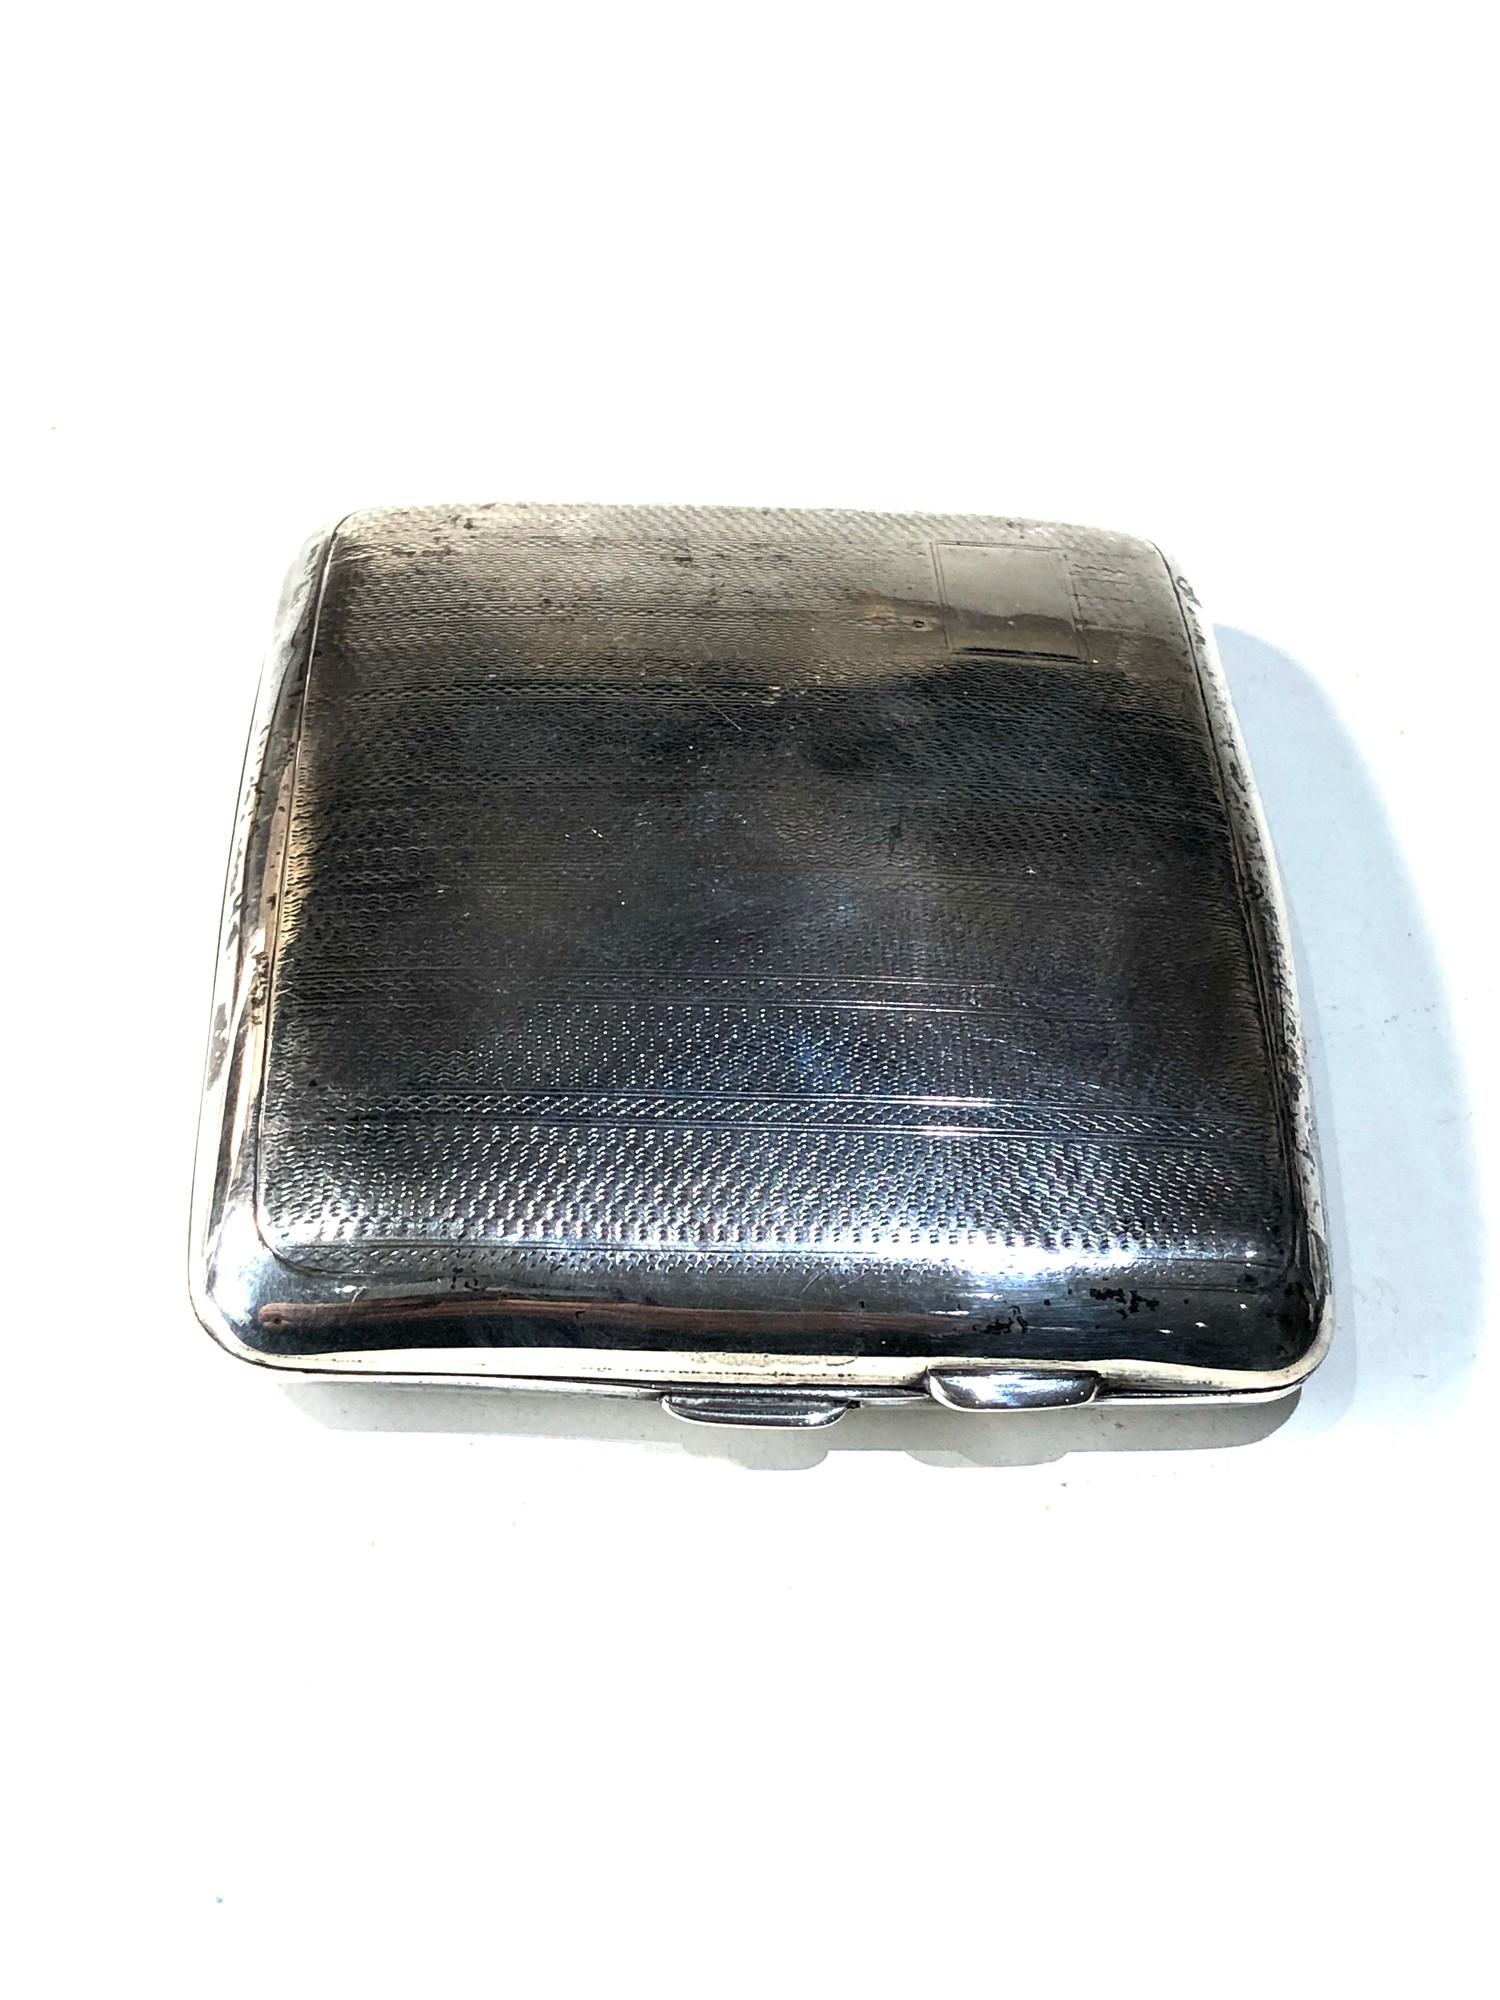 Antique silver cigarette case weight 120g